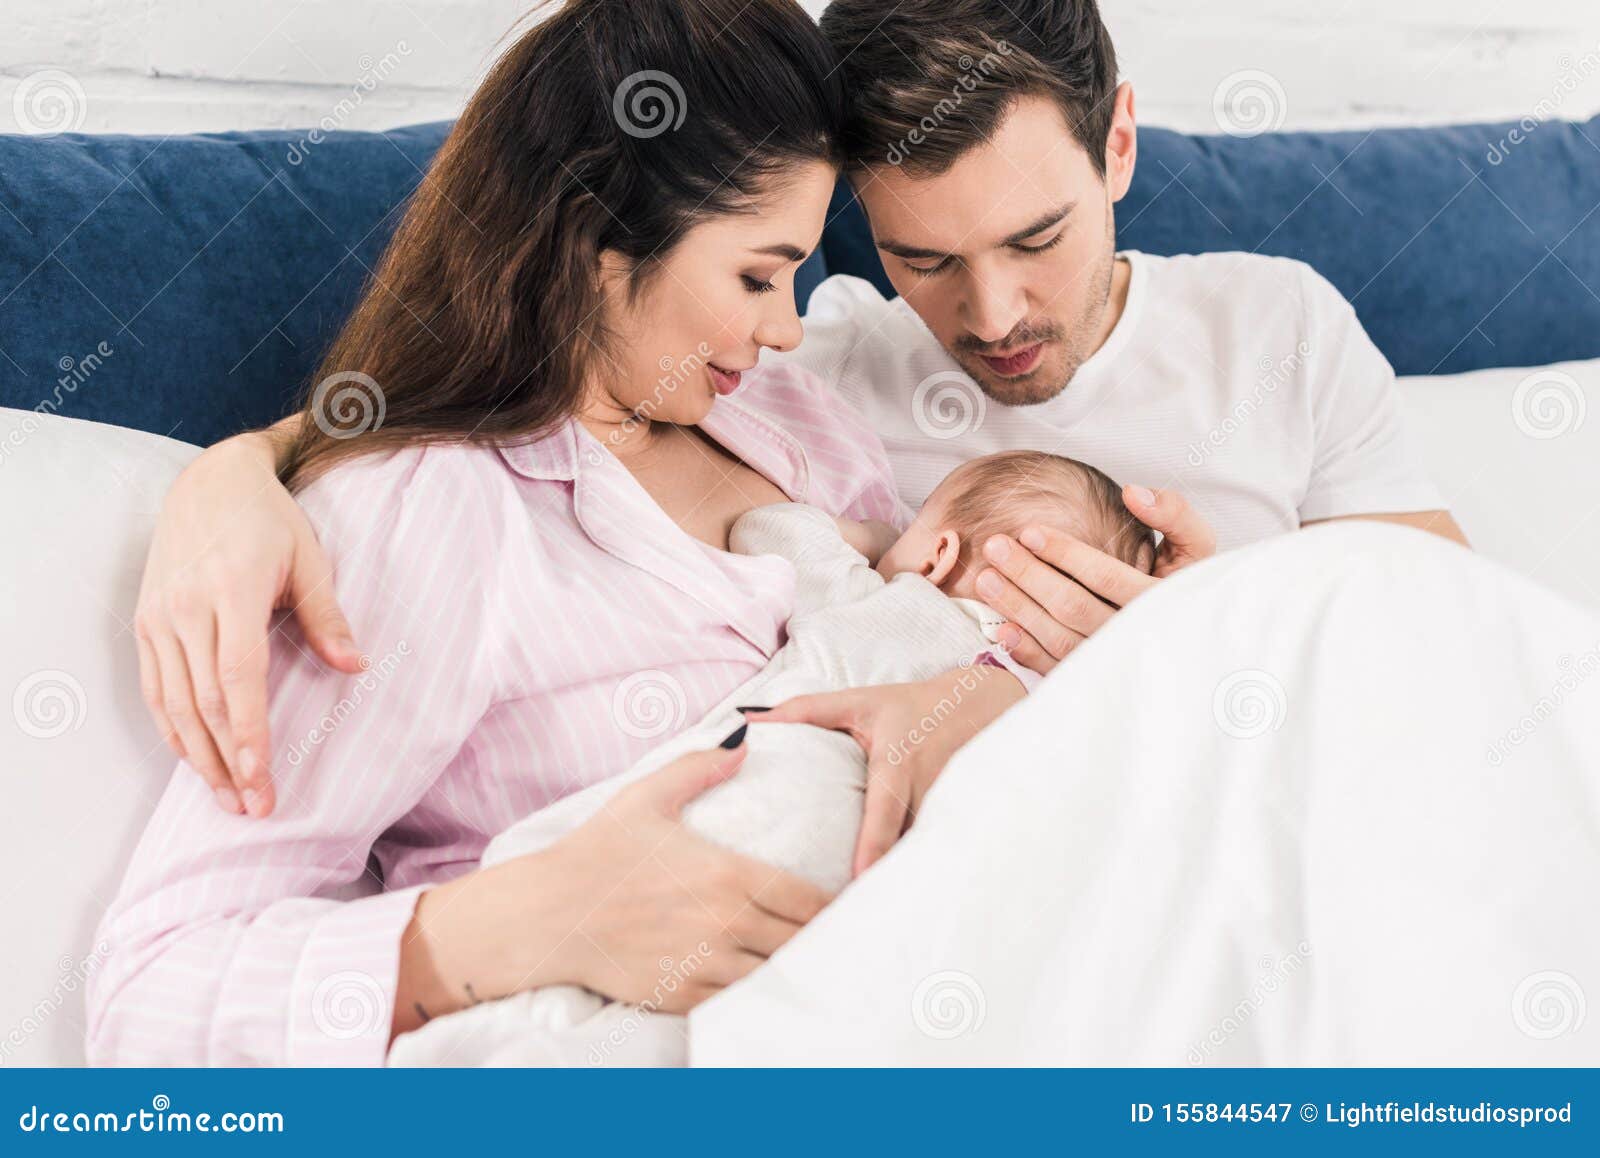 Woman Breastfeeding Husband Stock Photos photo